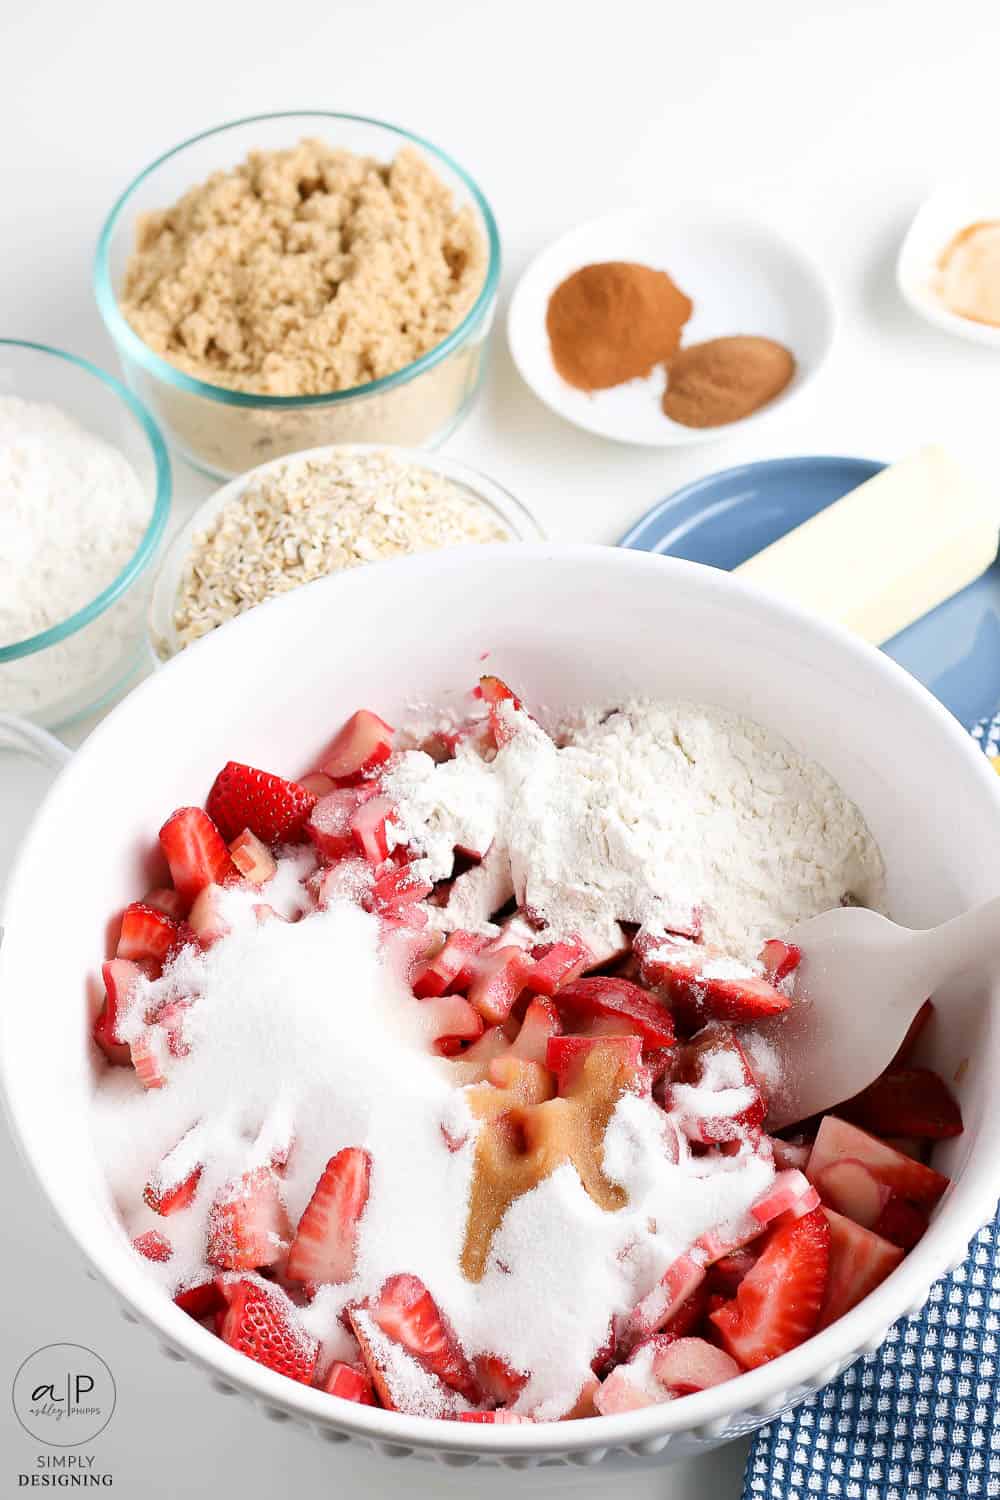 add sugar, flour, lemon juice, and vanilla onto strawberries and rhubarb